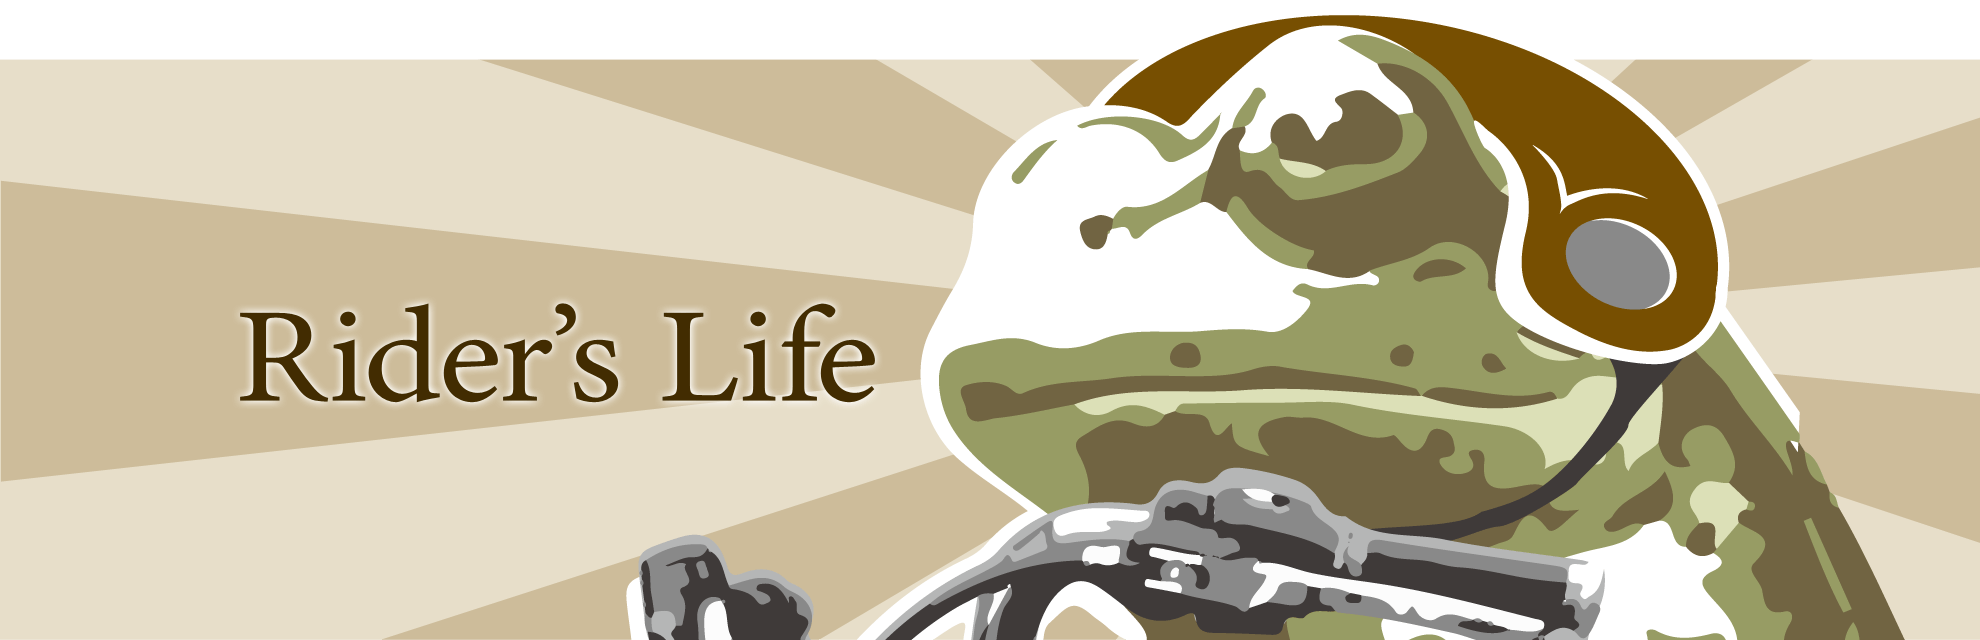 Rider's Life